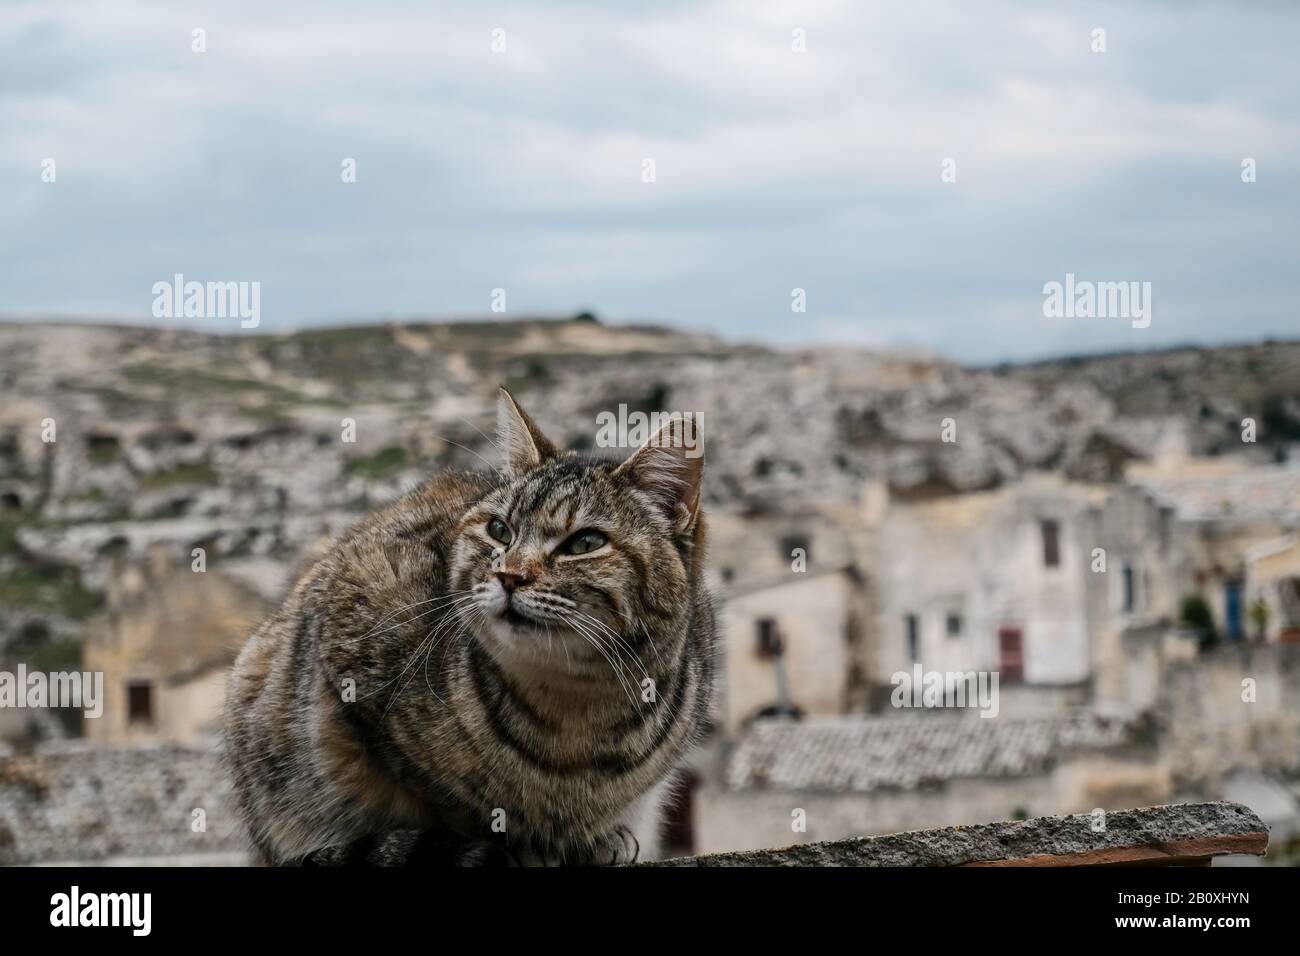 Grey striped wild cat face details portrait on matera city blur background,pets Stock Photo